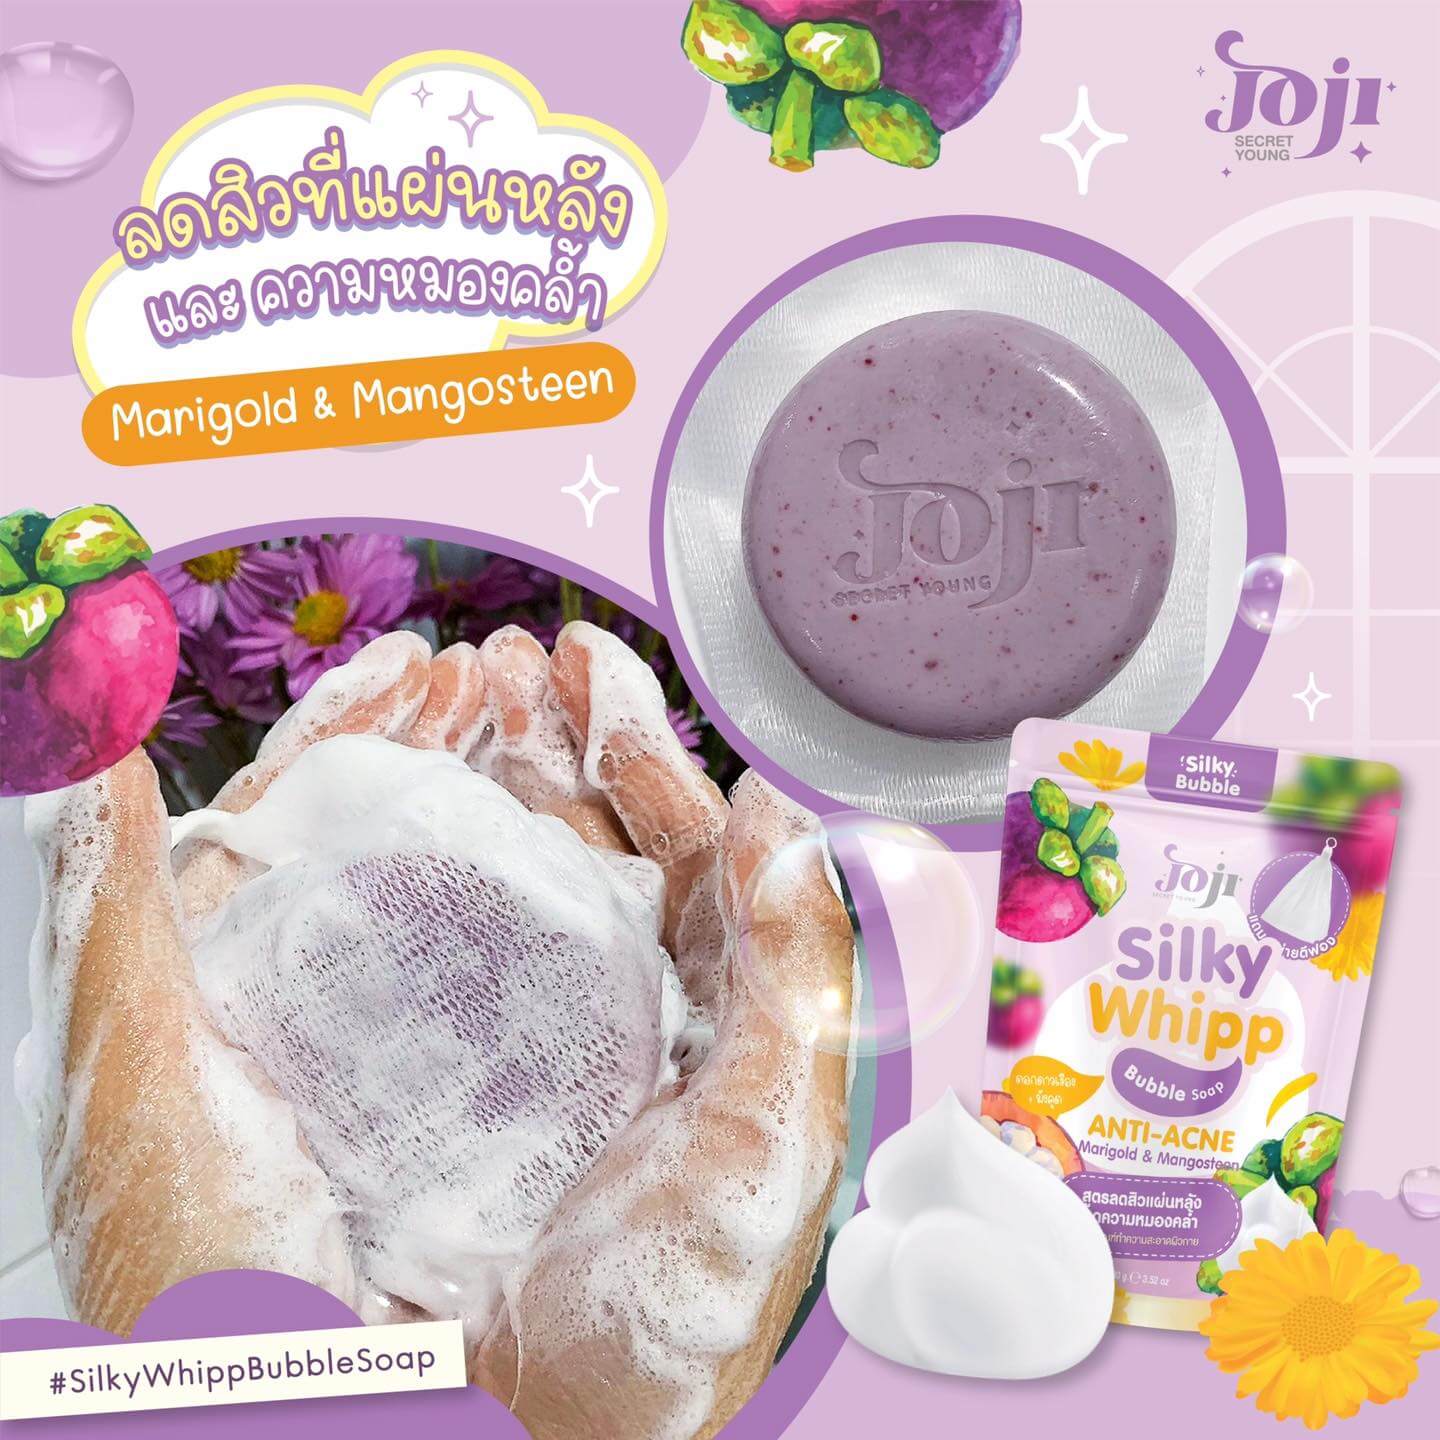 JOJI SECRET YOUNG Silky Whipp Bubble Soap # Anti-Acne 100g 